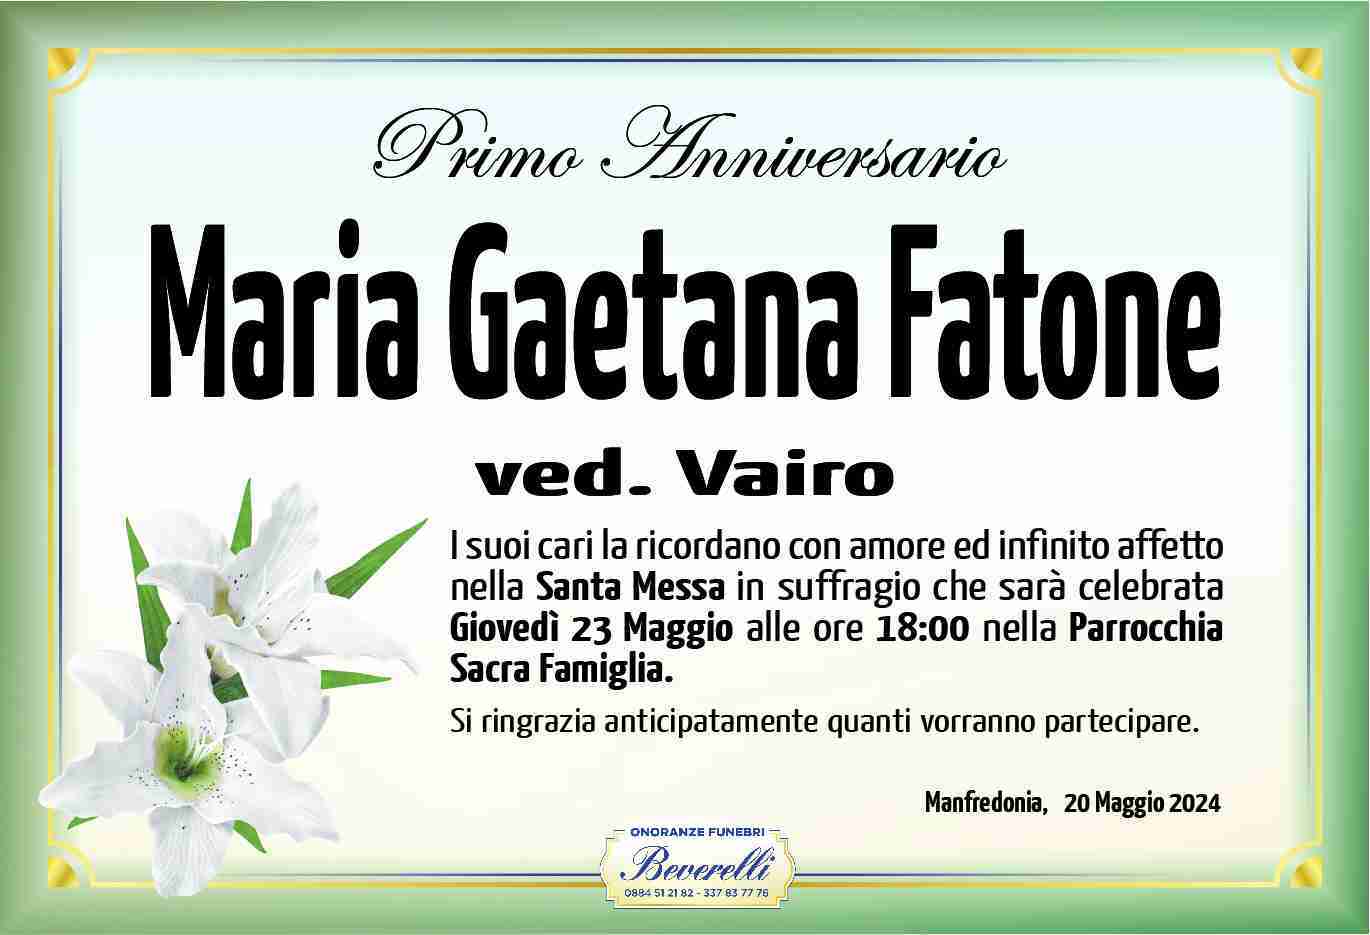 Maria Gaetana Fatone